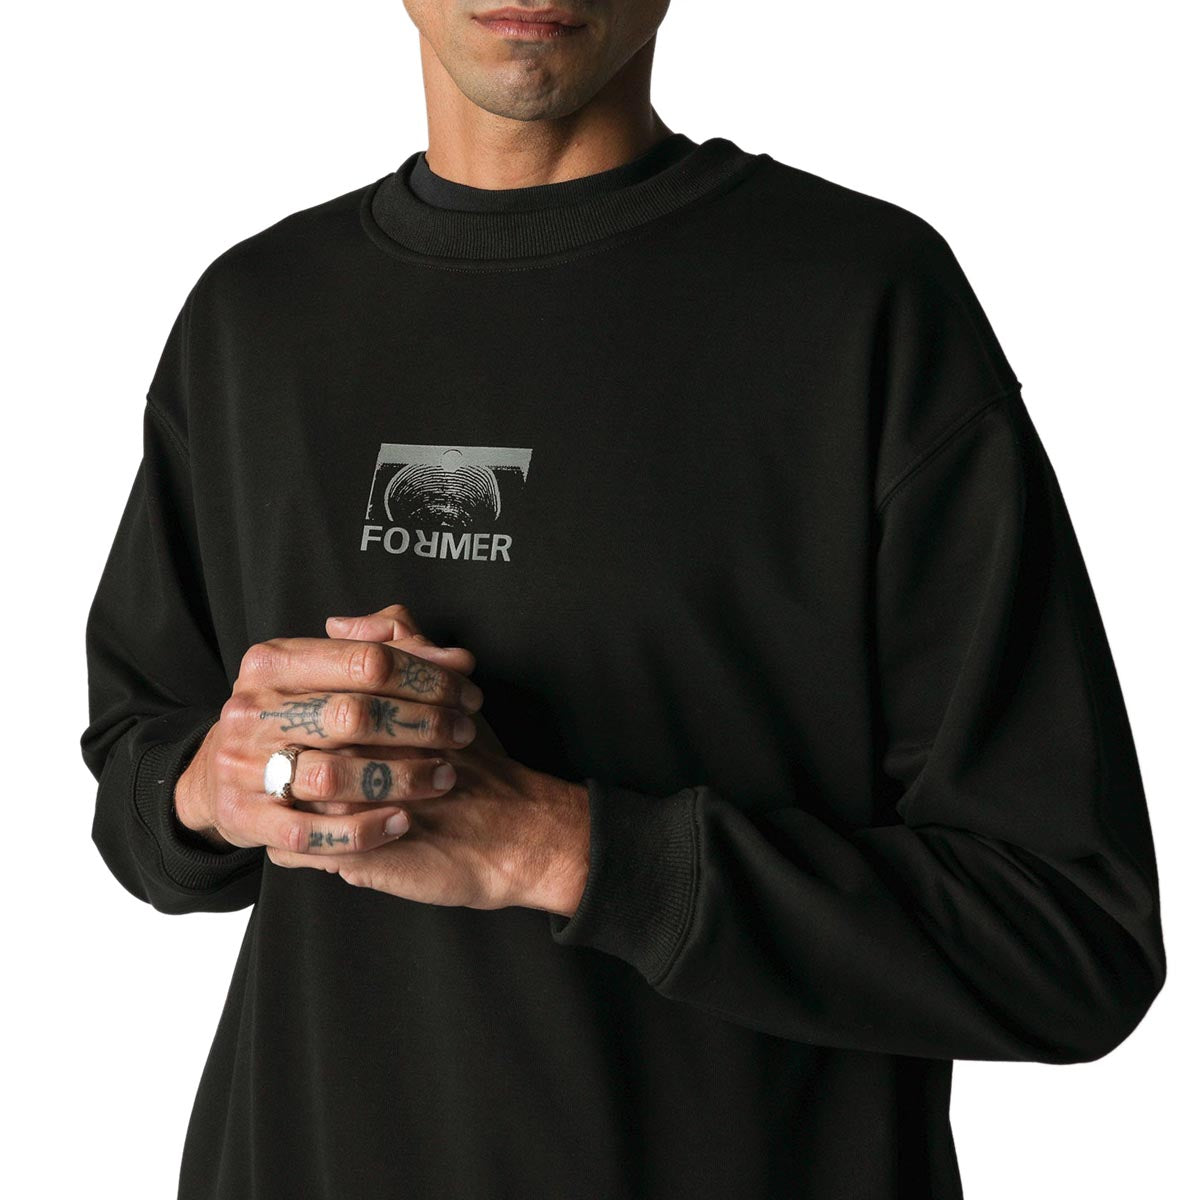 Former Collision Crux Crew Sweatshirt - Black image 2